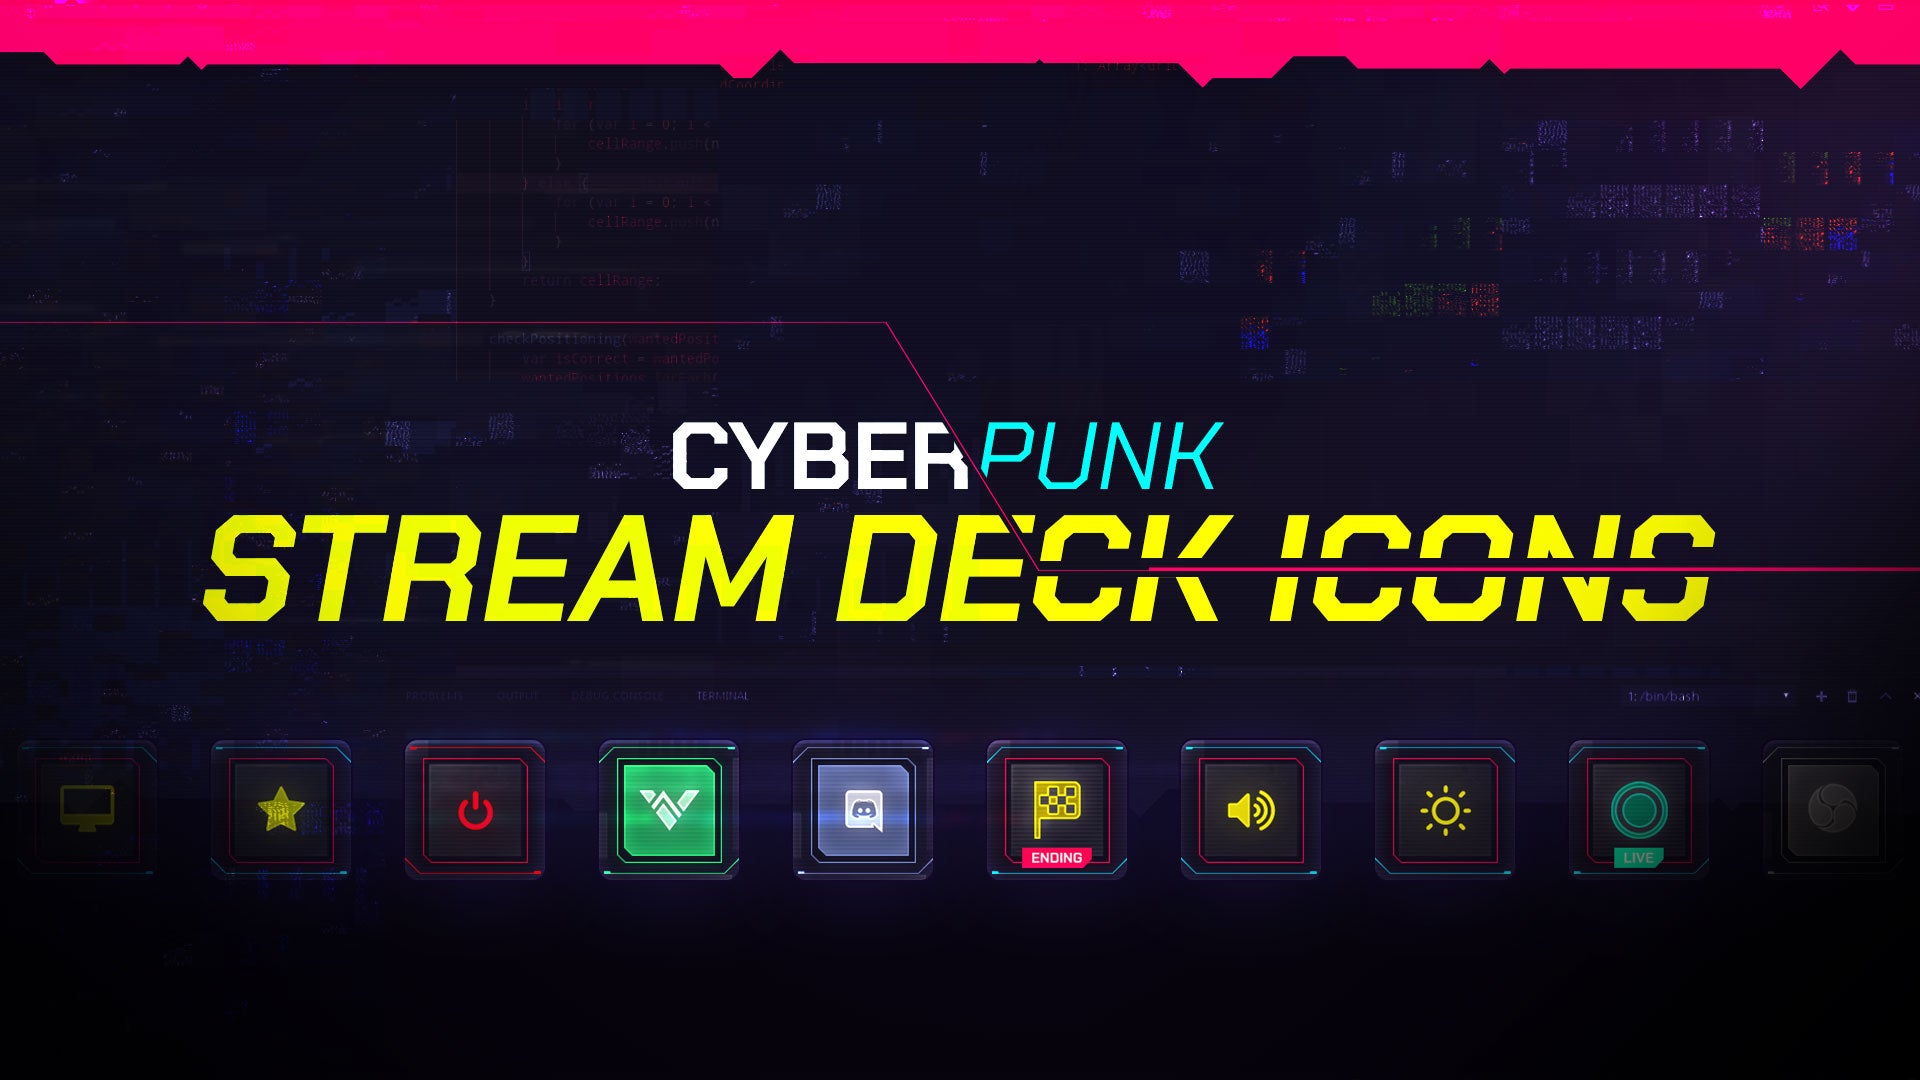 Cyberpunk | Free Elgato Stream Deck Icons | Visuals by Impulse